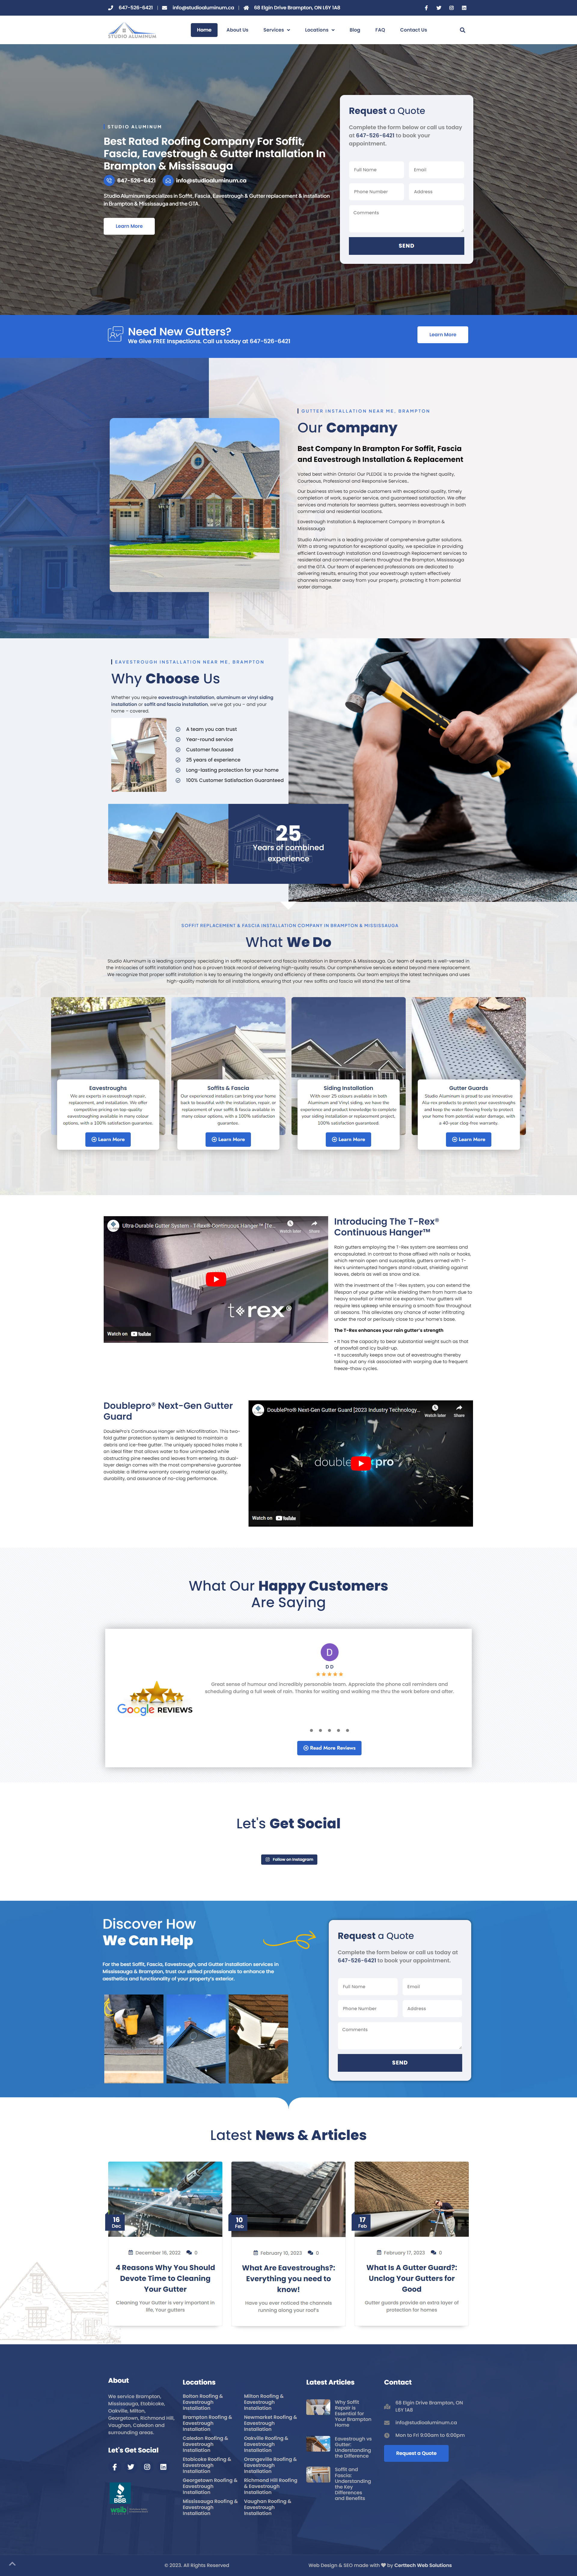 A website design for Studio Aluminum, a roofing company.